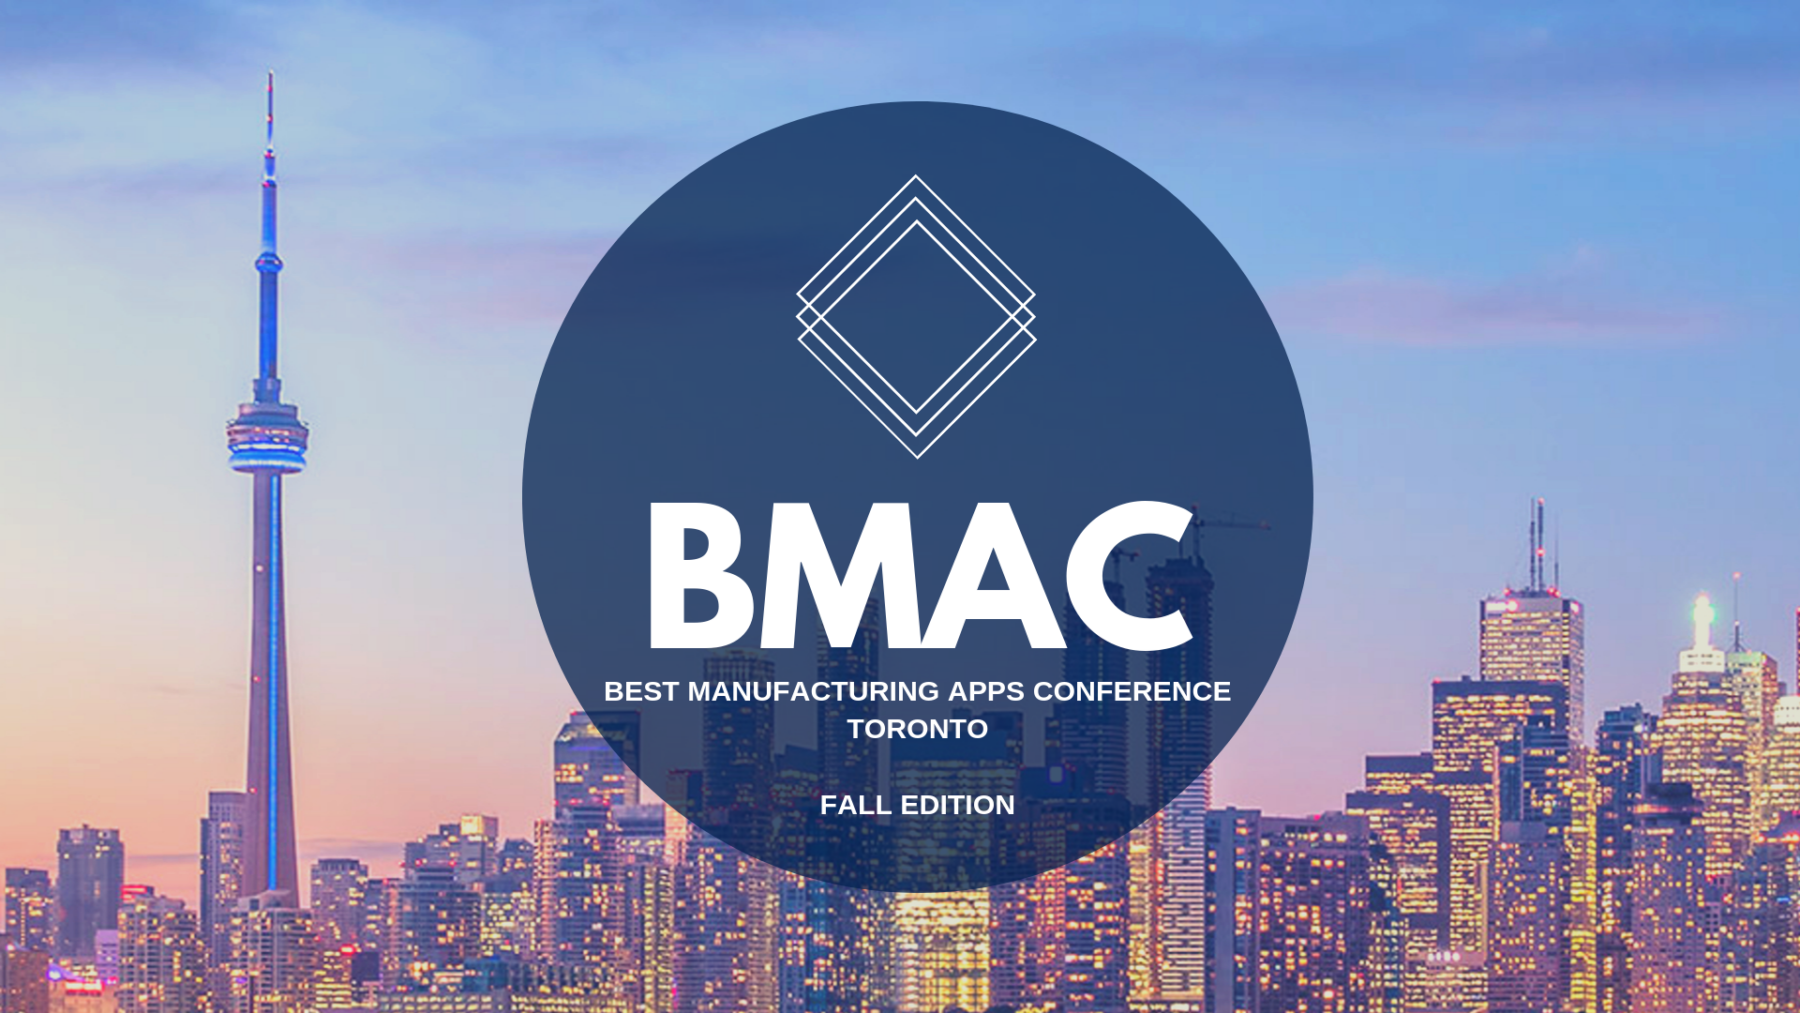 BMAC 2019 Fall Edition